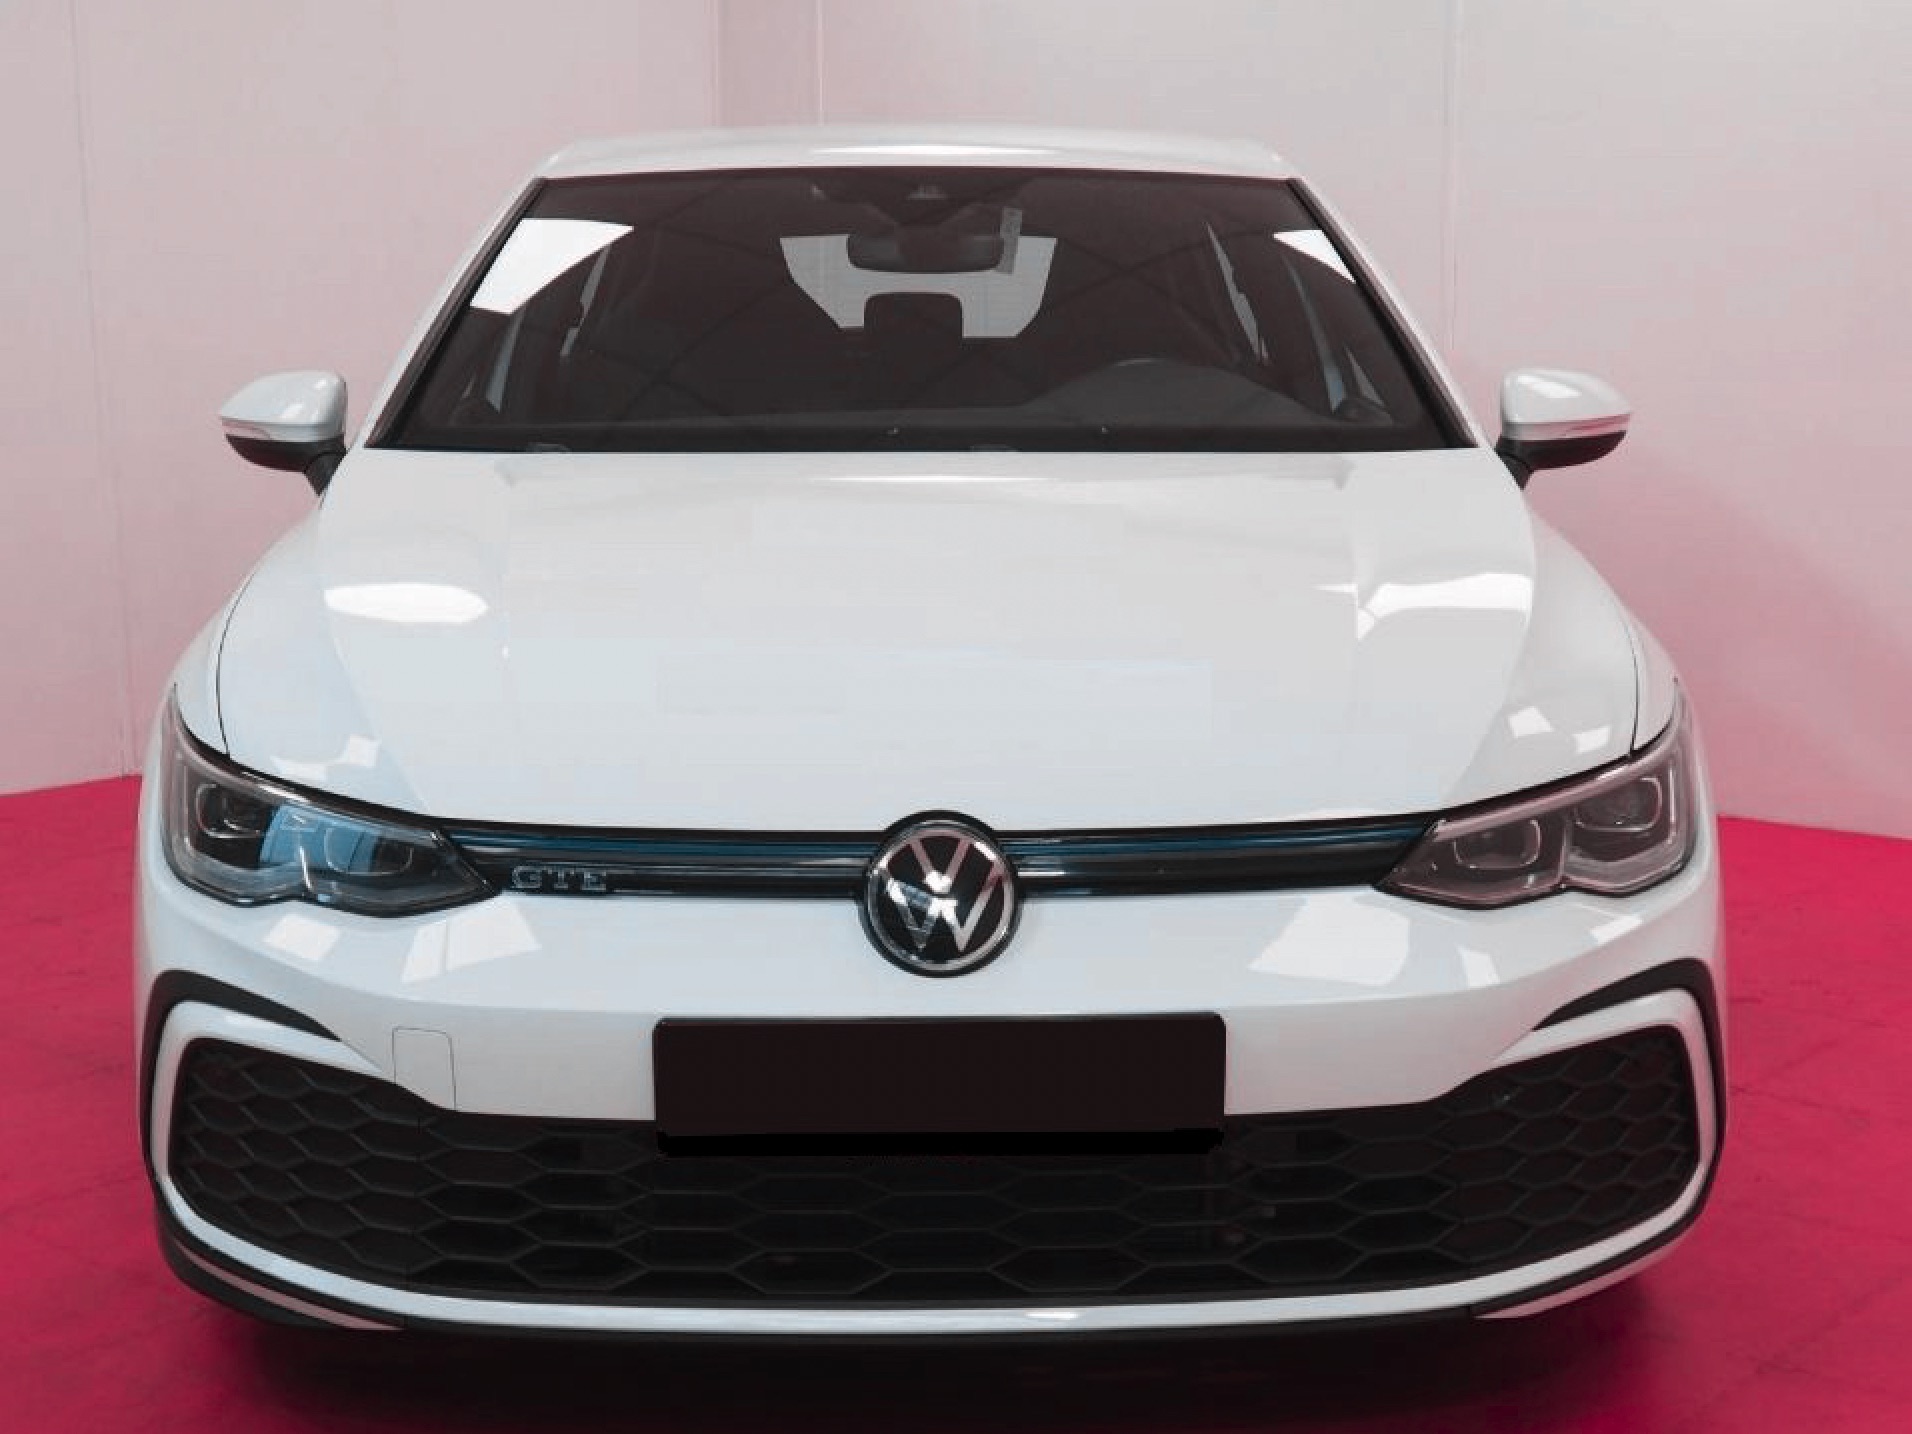 Volkswagen Golf- GTE 1.4TSI DSG - Benzin/Electro Plug-in Hybrid 180kW/245HP - 13kWh battery - White - 17&quot; &quot;Richmond&quot; wheels - 18500 km - 2020.12.